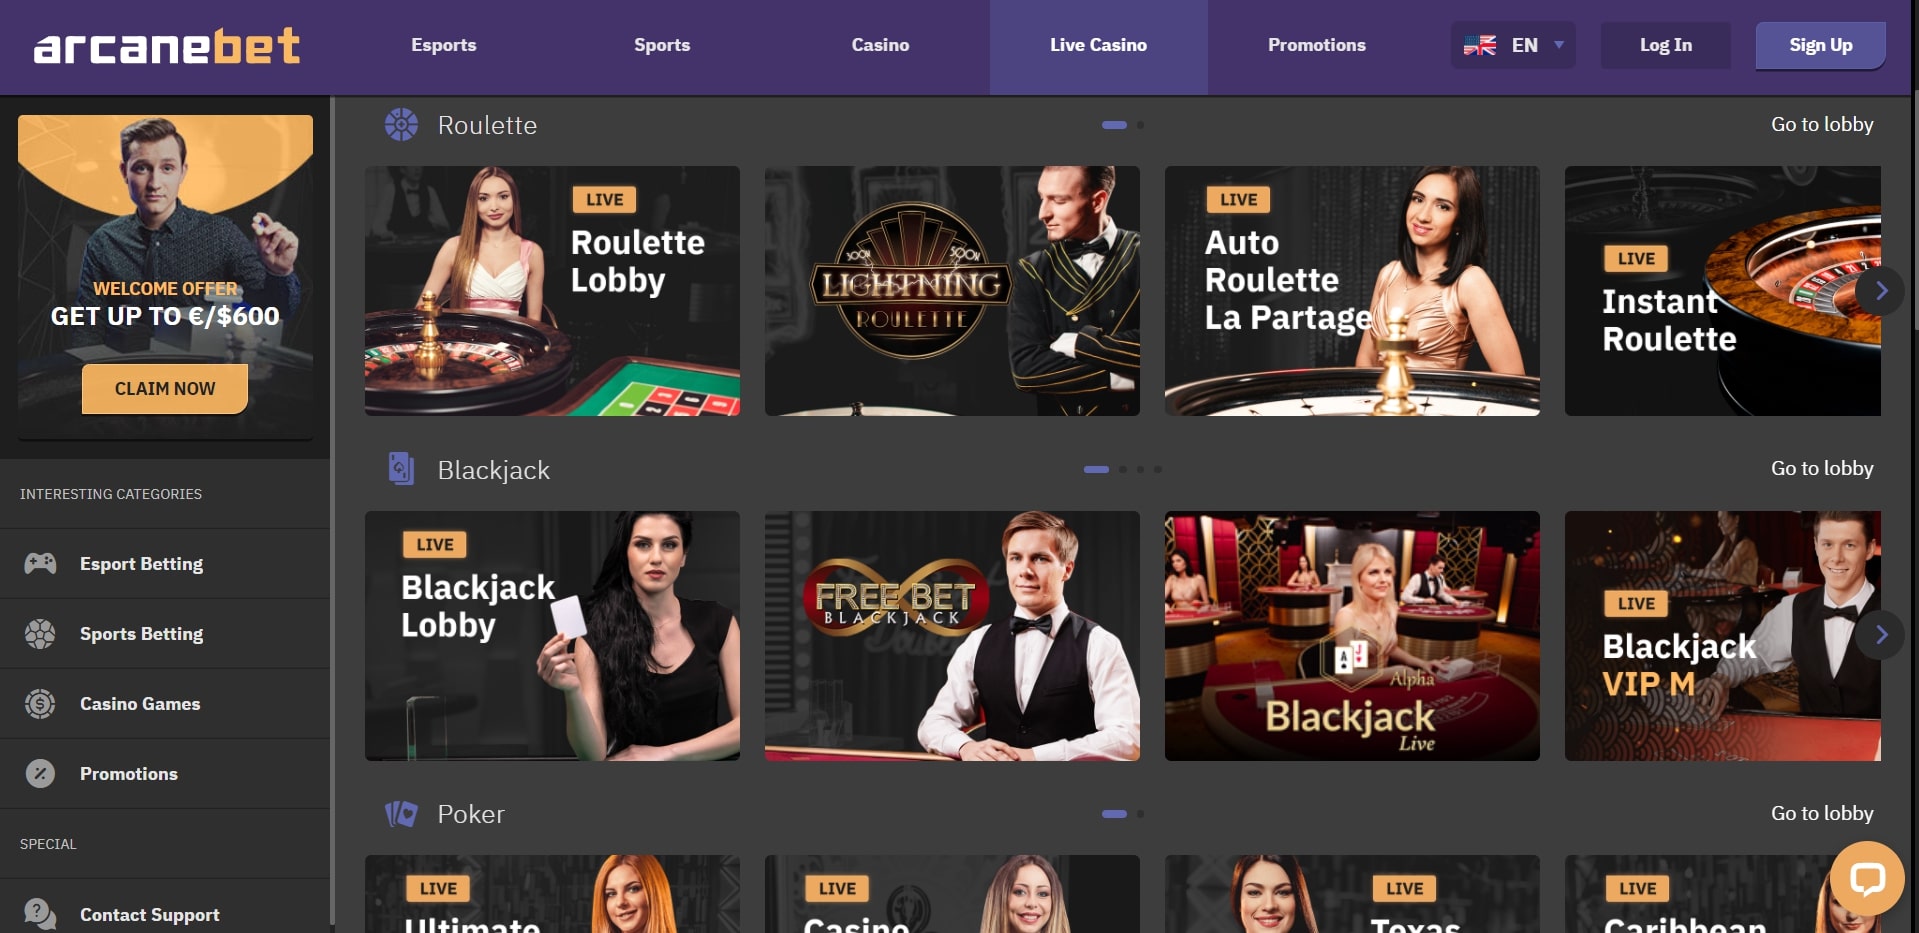 Arcanebet Casino Live Dealer Games